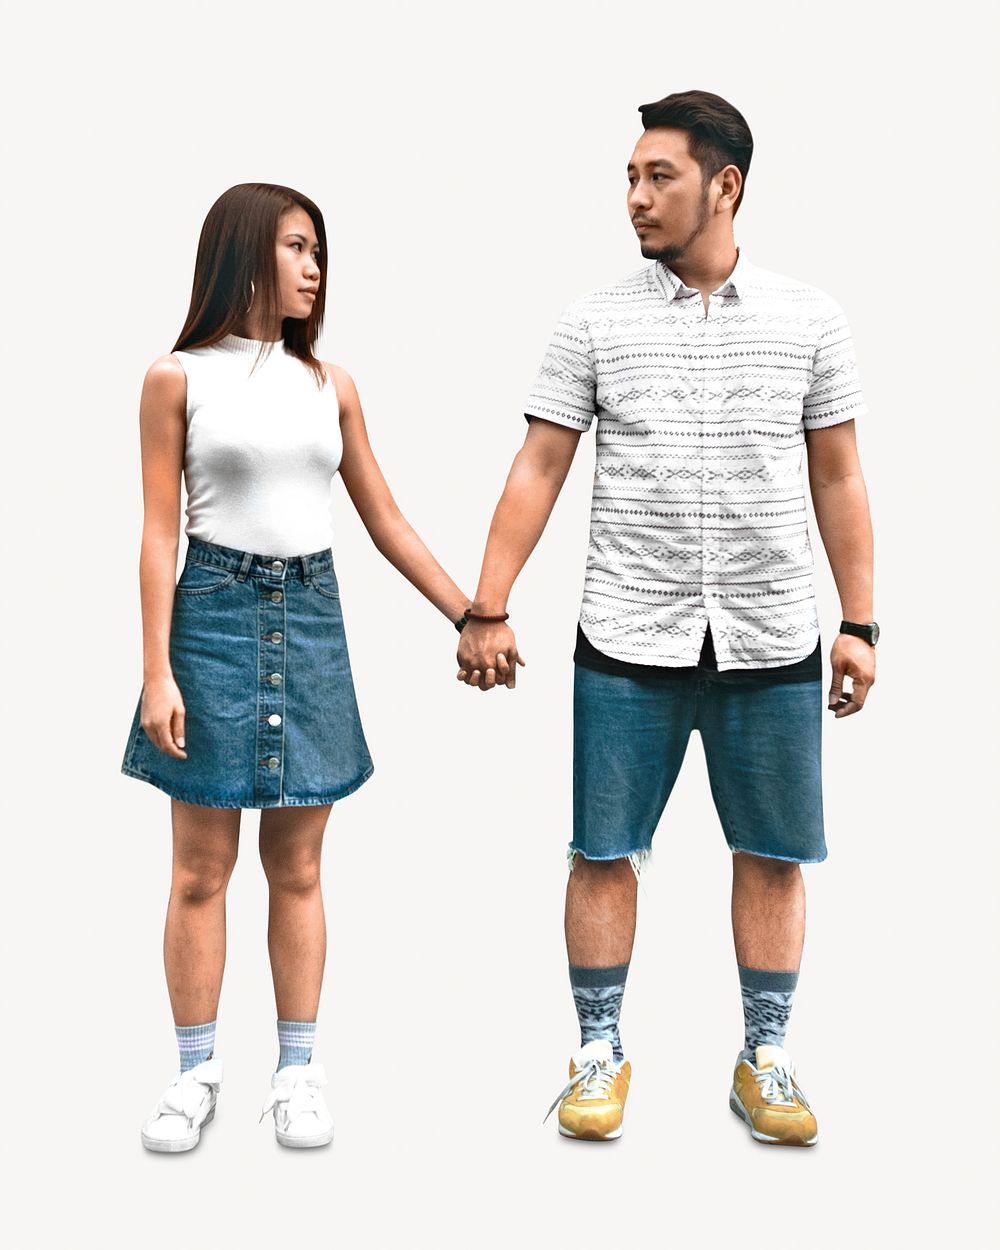 Hand-holding Asian couple  isolated image